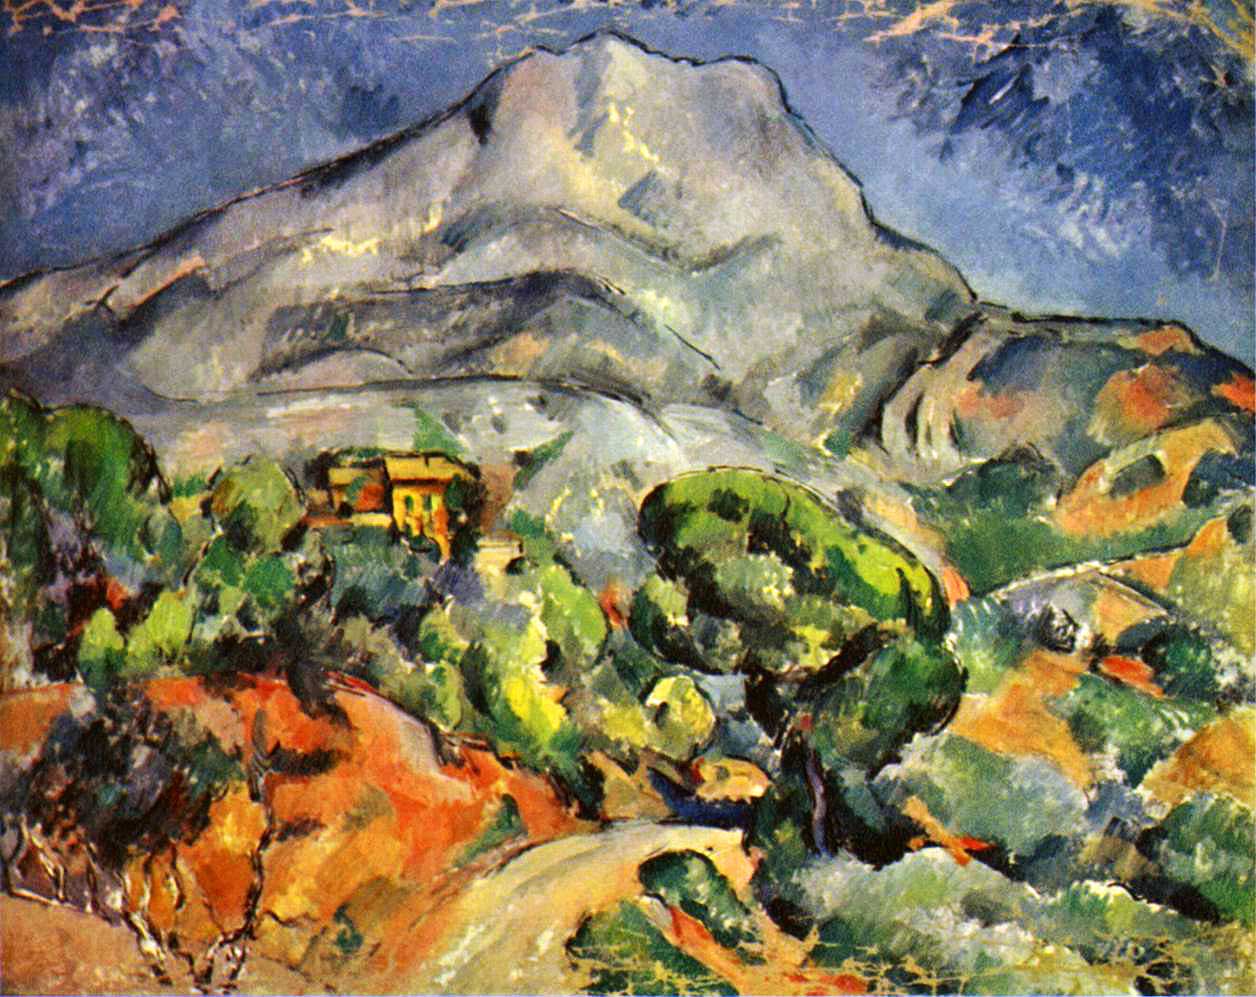 001Paul_Cezanne_STVictoire,1899-1902.jpg